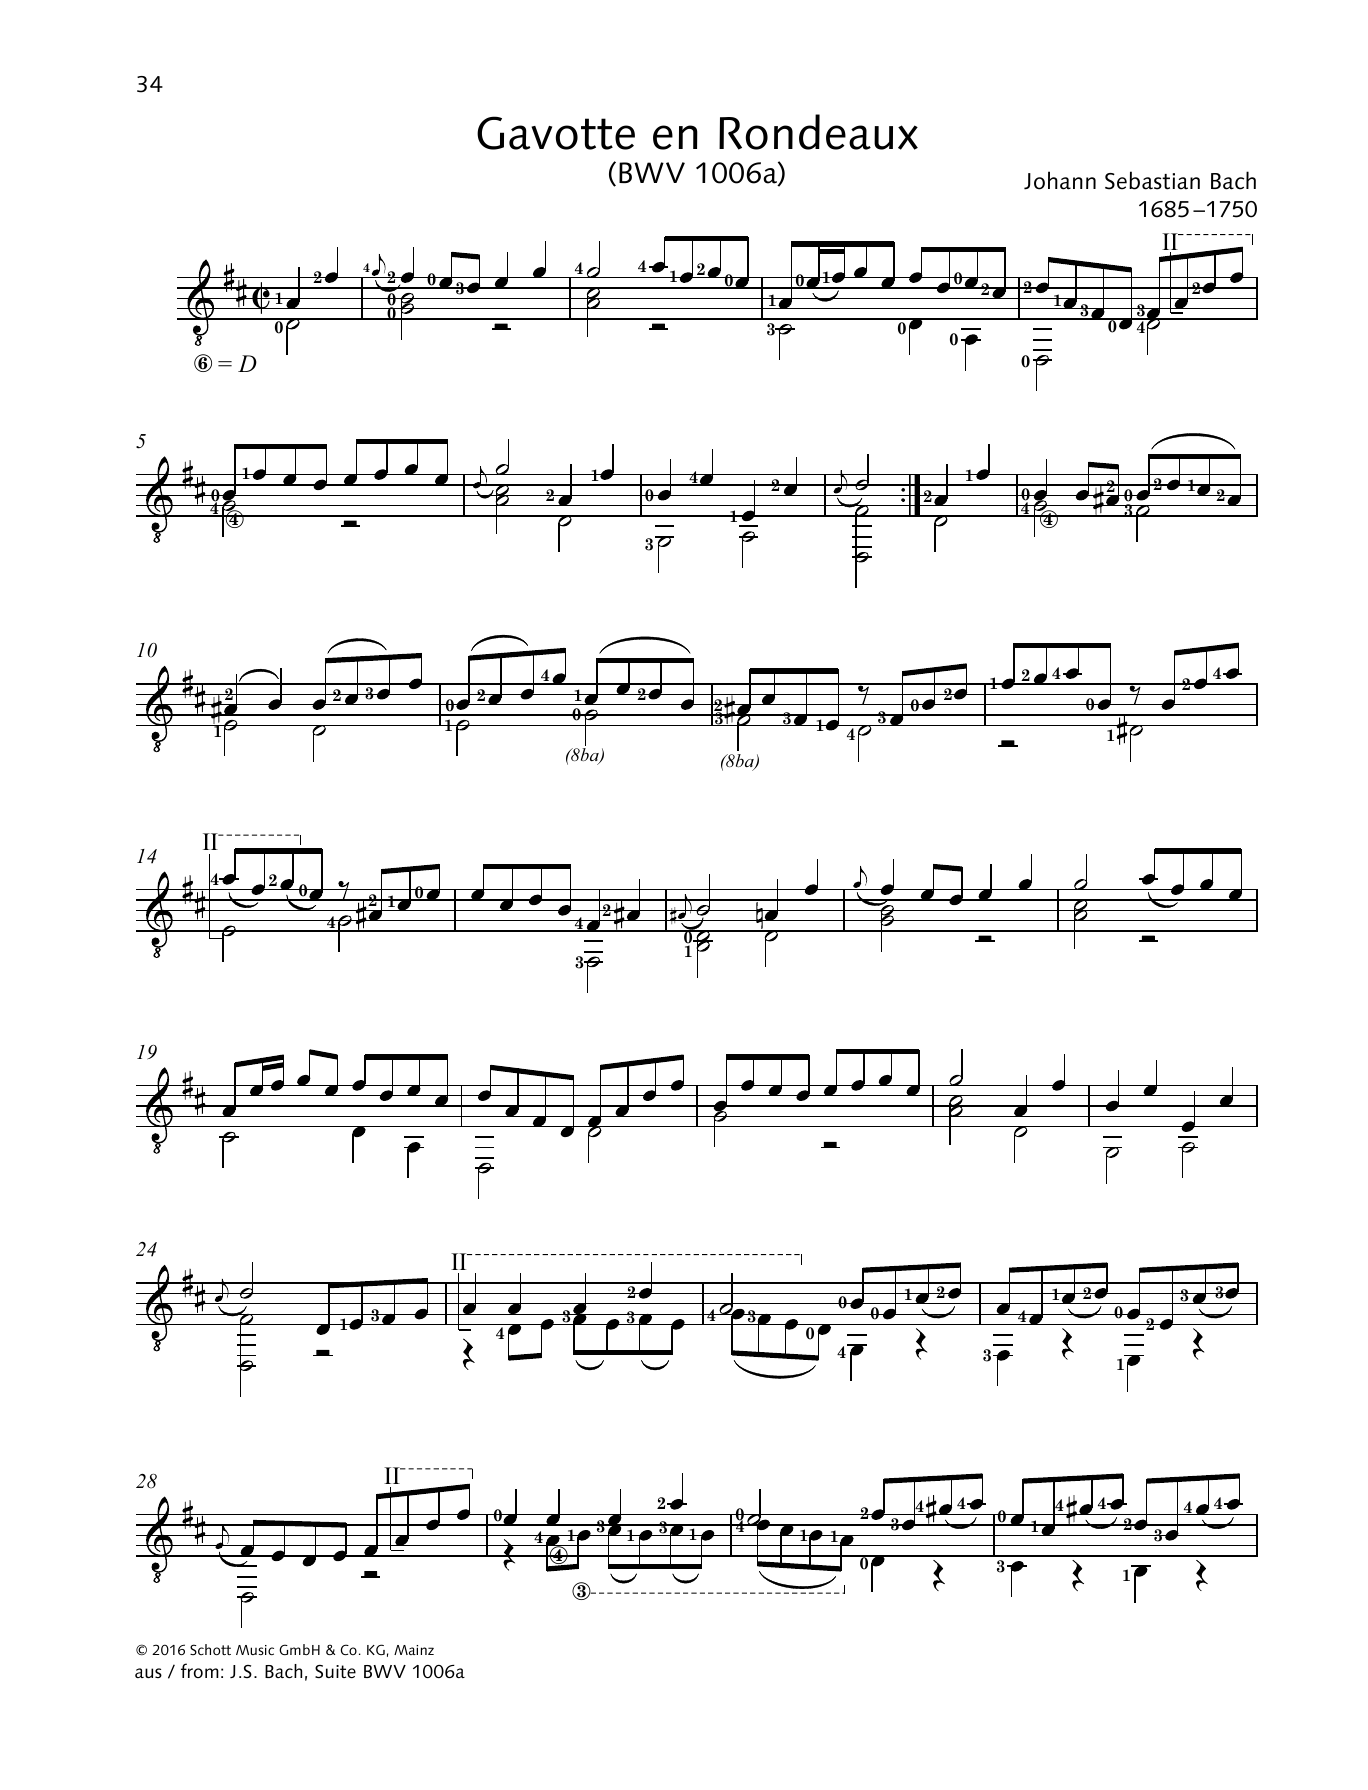 Johann Sebastian Bach Gavotte en Rondeaux Sheet Music Notes & Chords for Solo Guitar - Download or Print PDF